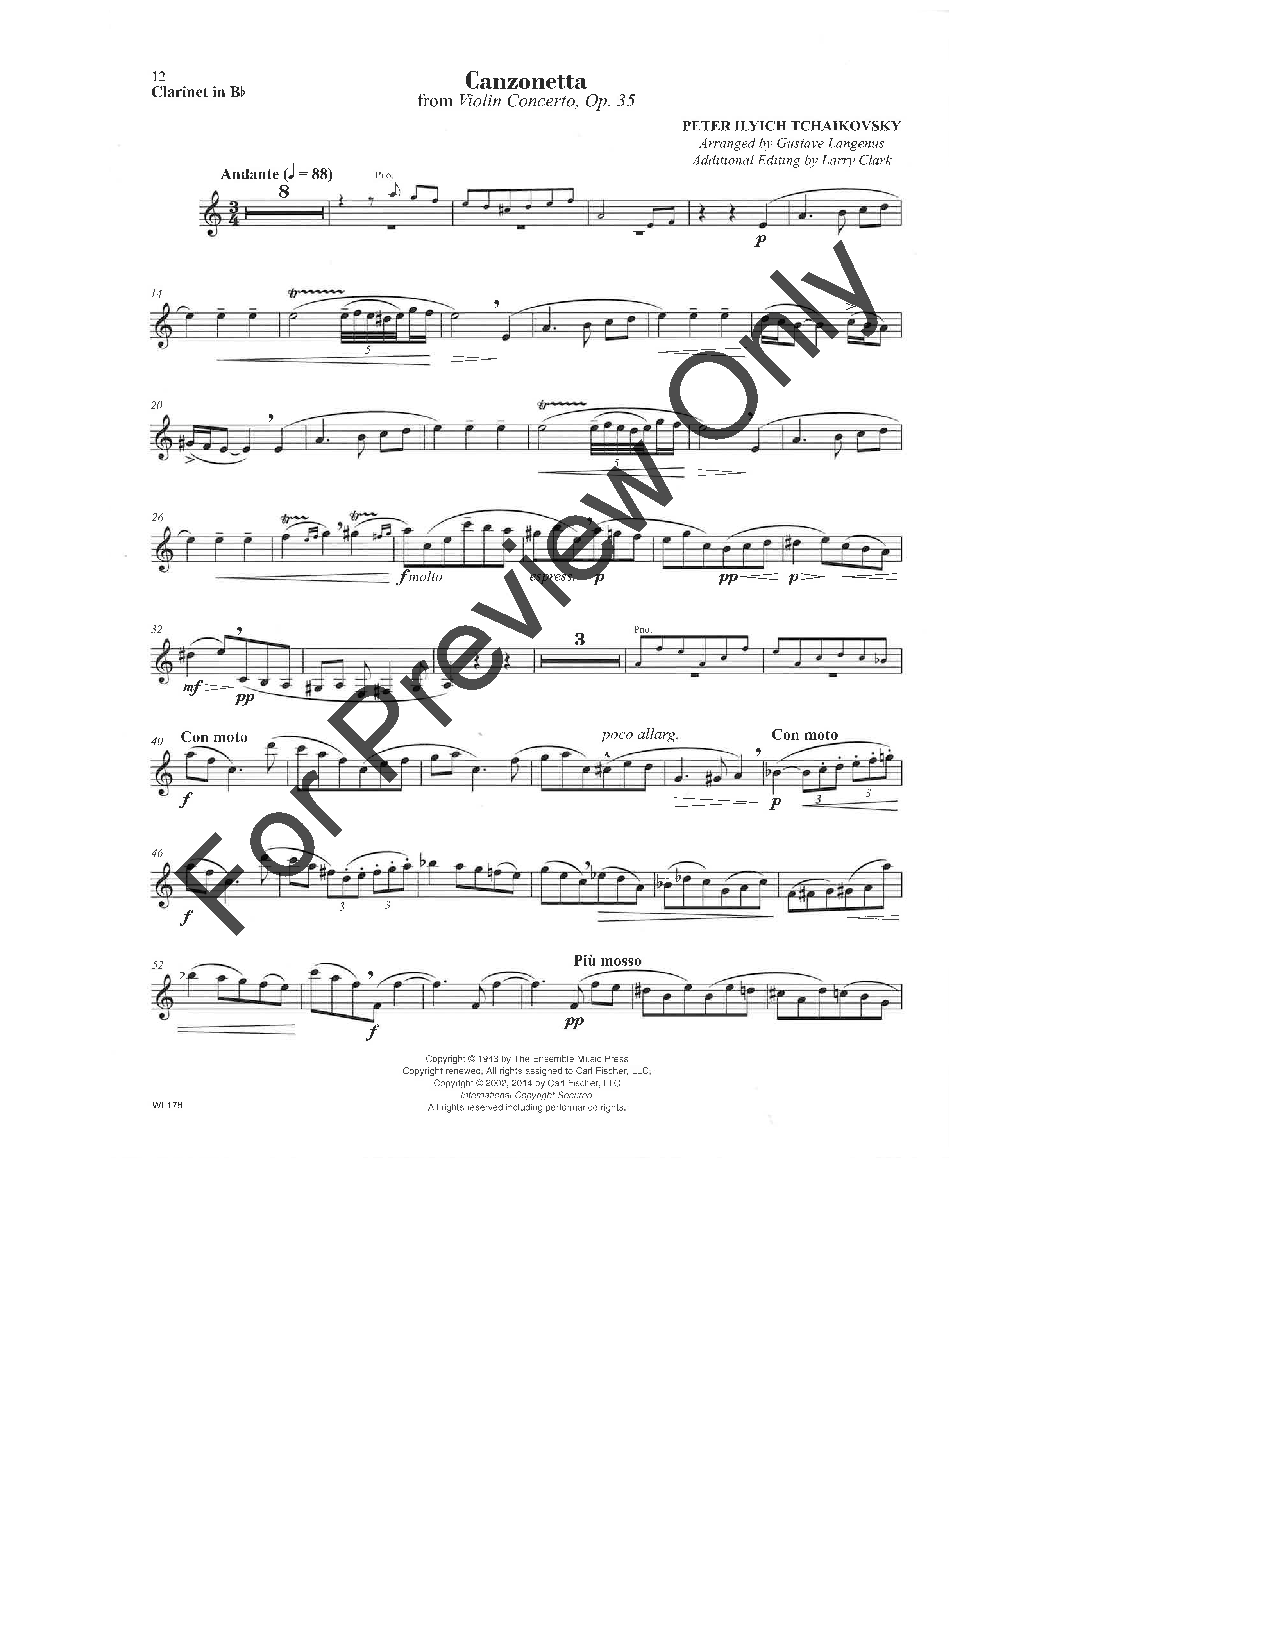 Festival Classics Clarinet BK/CD-Rom, .MP3 files and piano .pdf